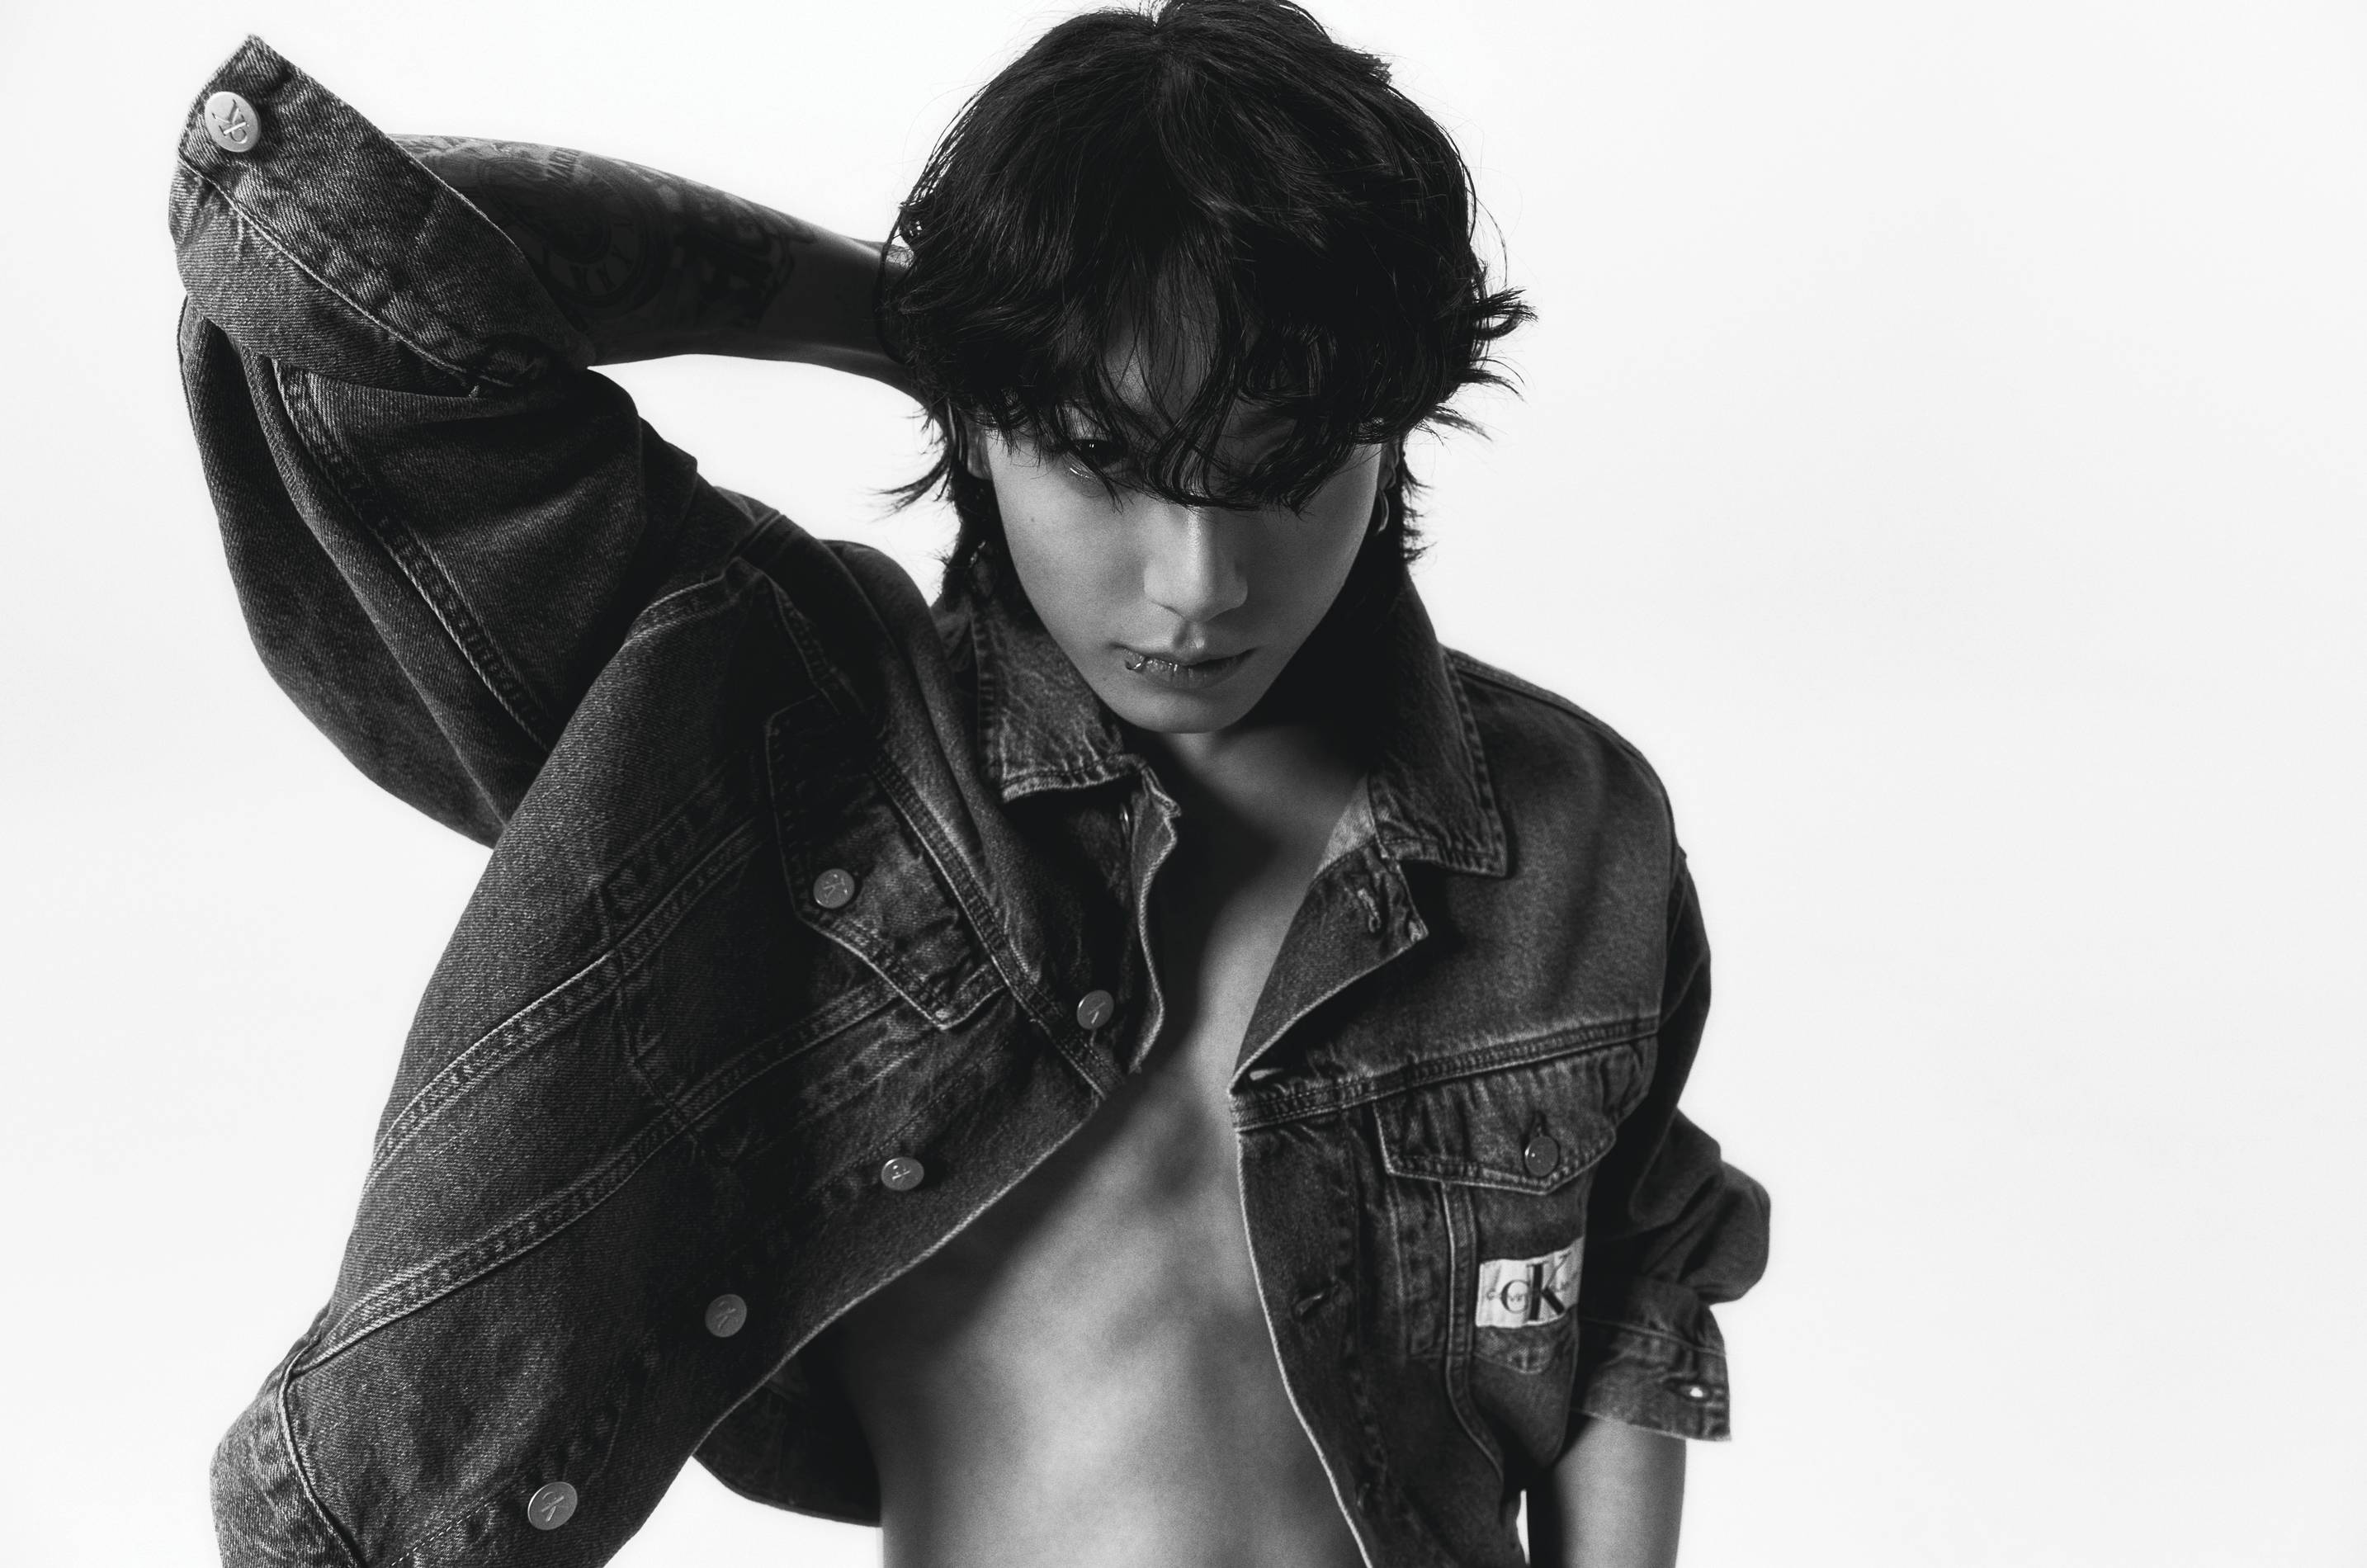 Jung Kook of BTS models for Calvin Klein in 2023 campaign